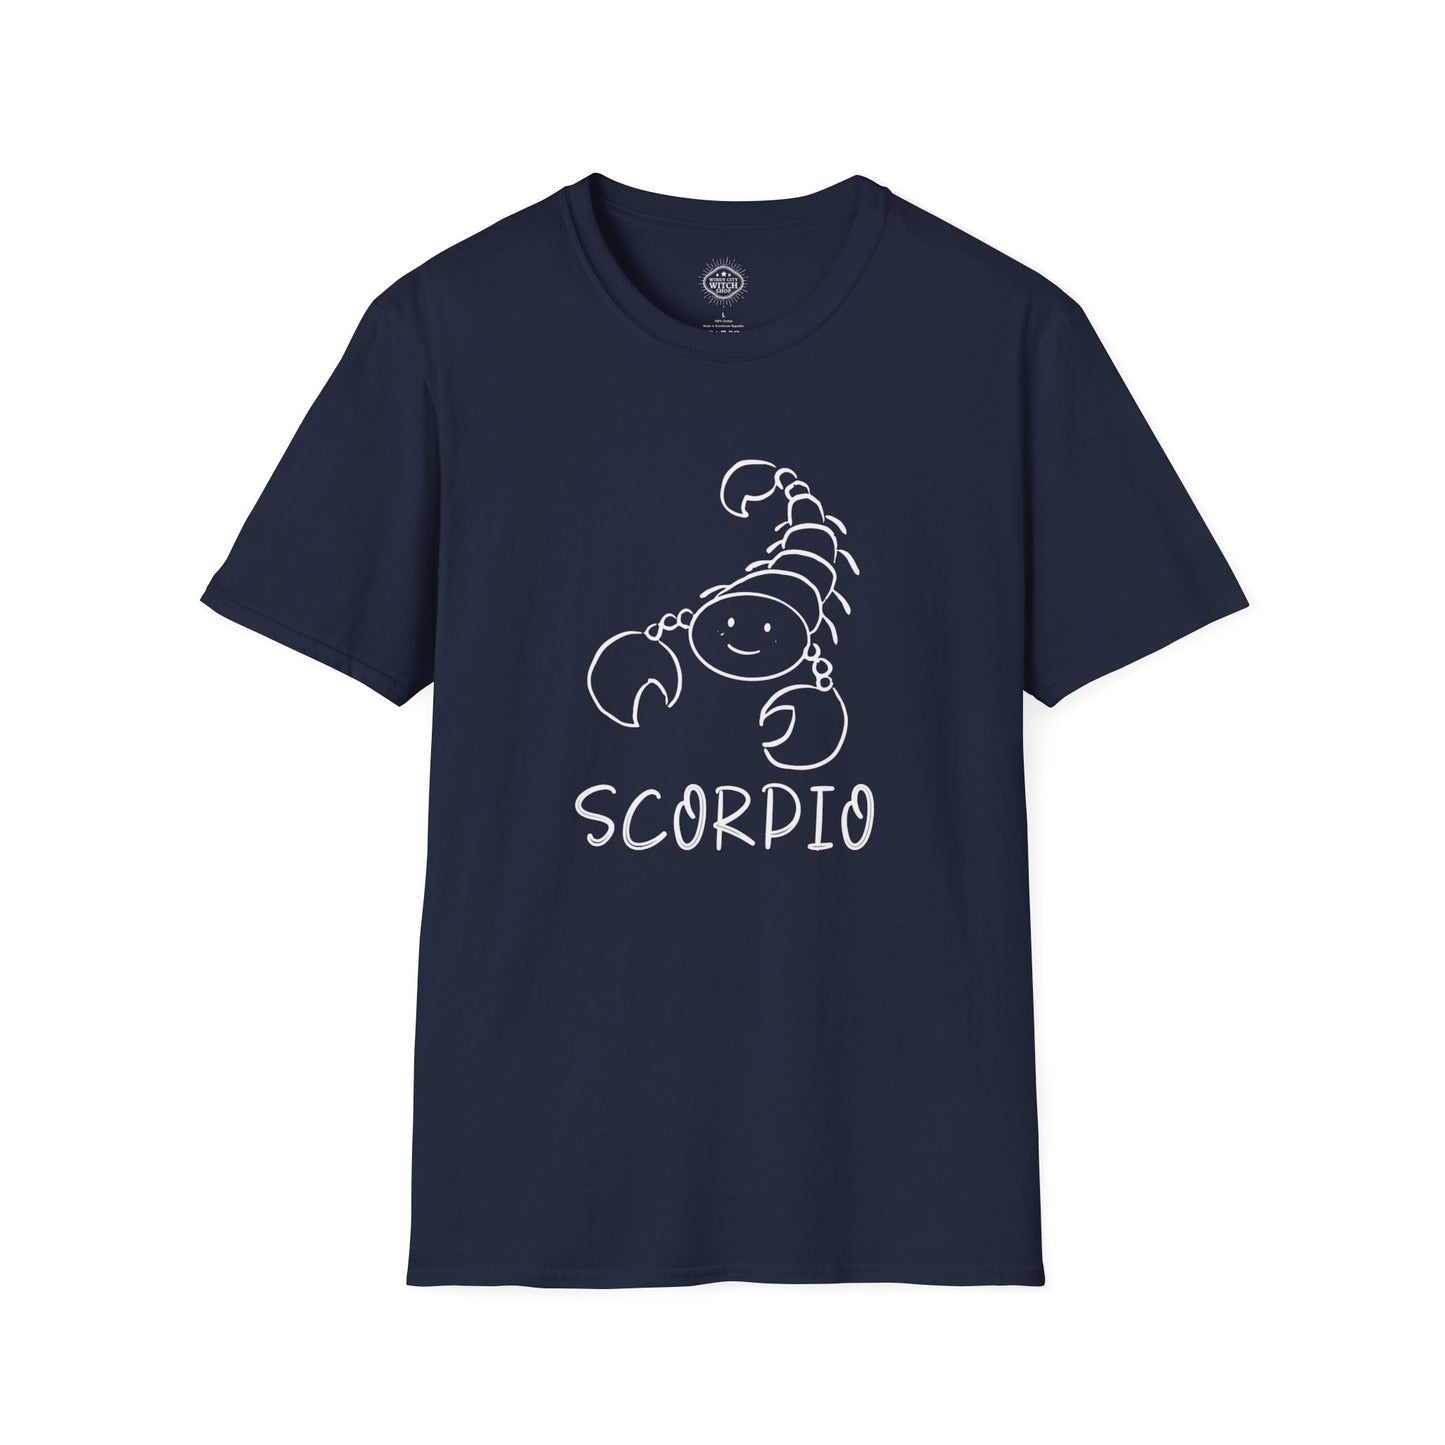 Cute Scorpio T-Shirt